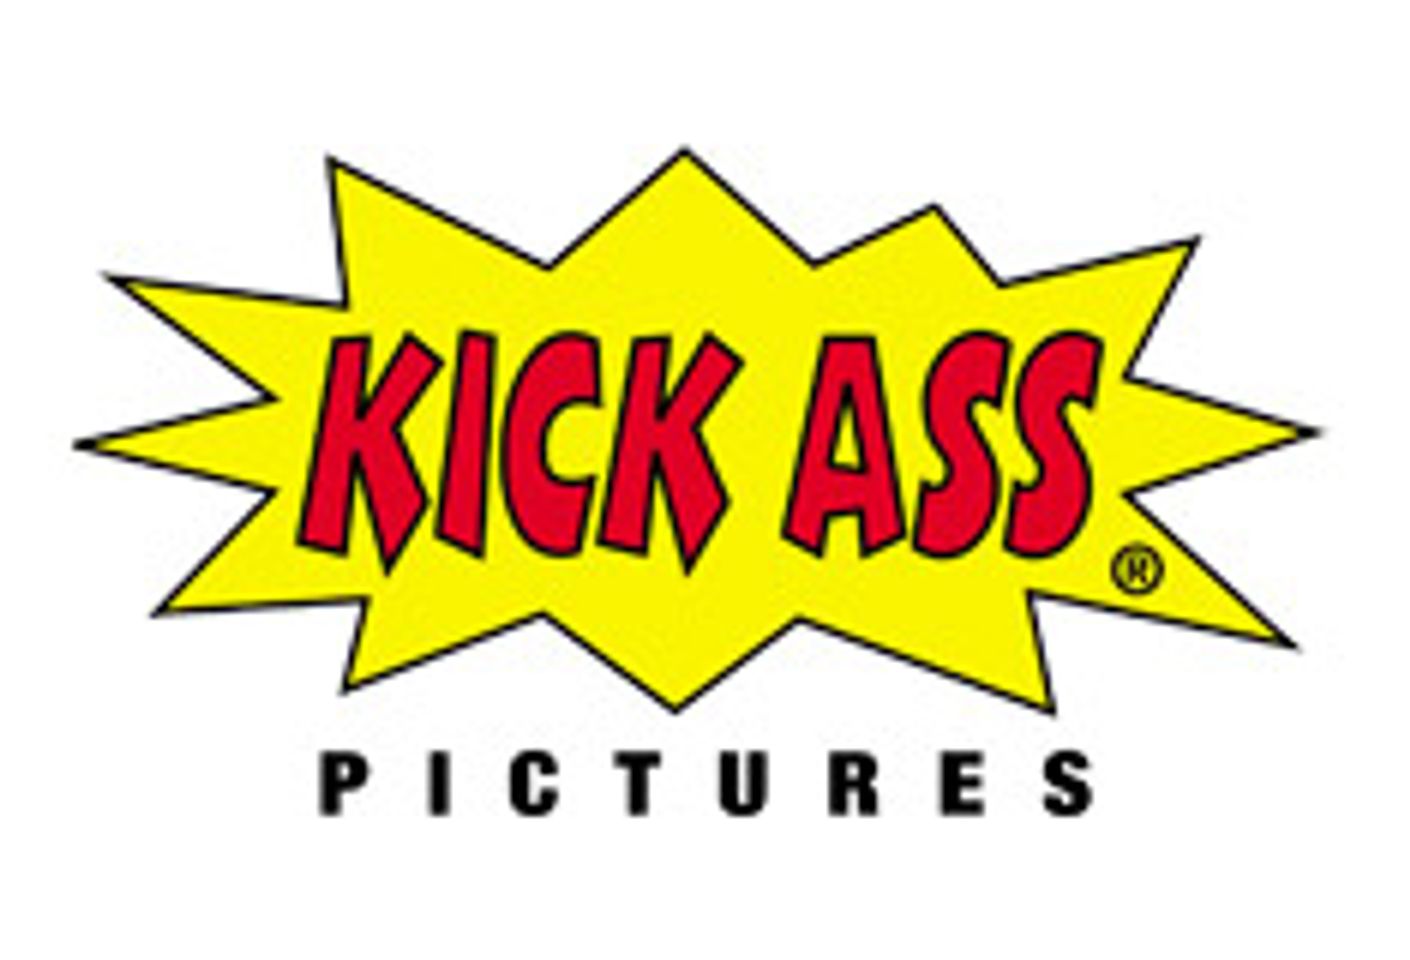 U. of Florida Law Journal Profiles Kick Ass Pictures' Mark Kulkis